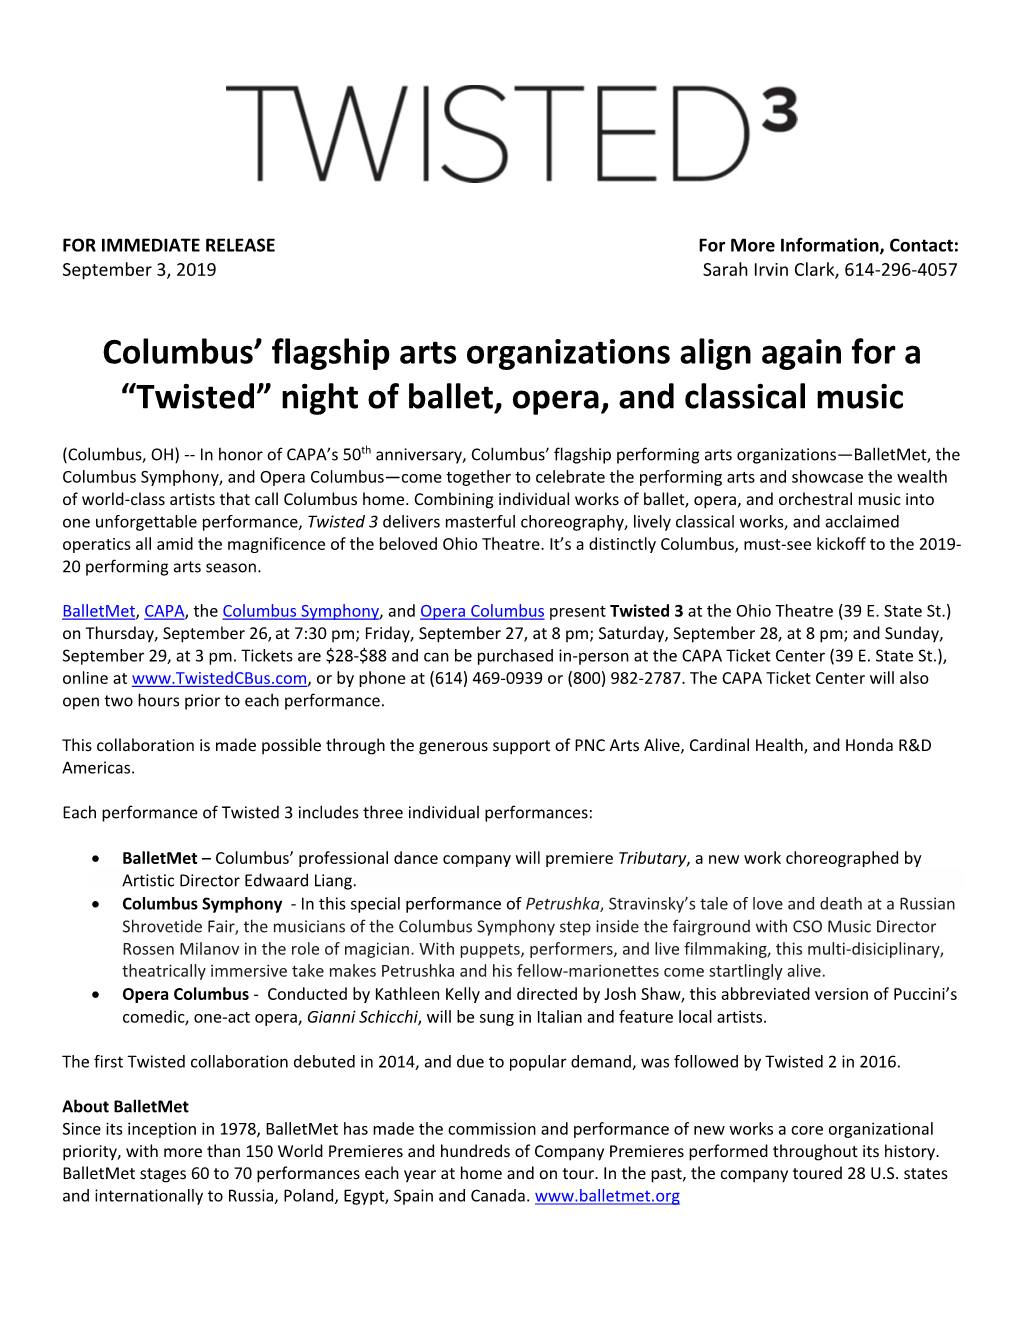 Columbus' Flagship Arts Organizations Align Again for A